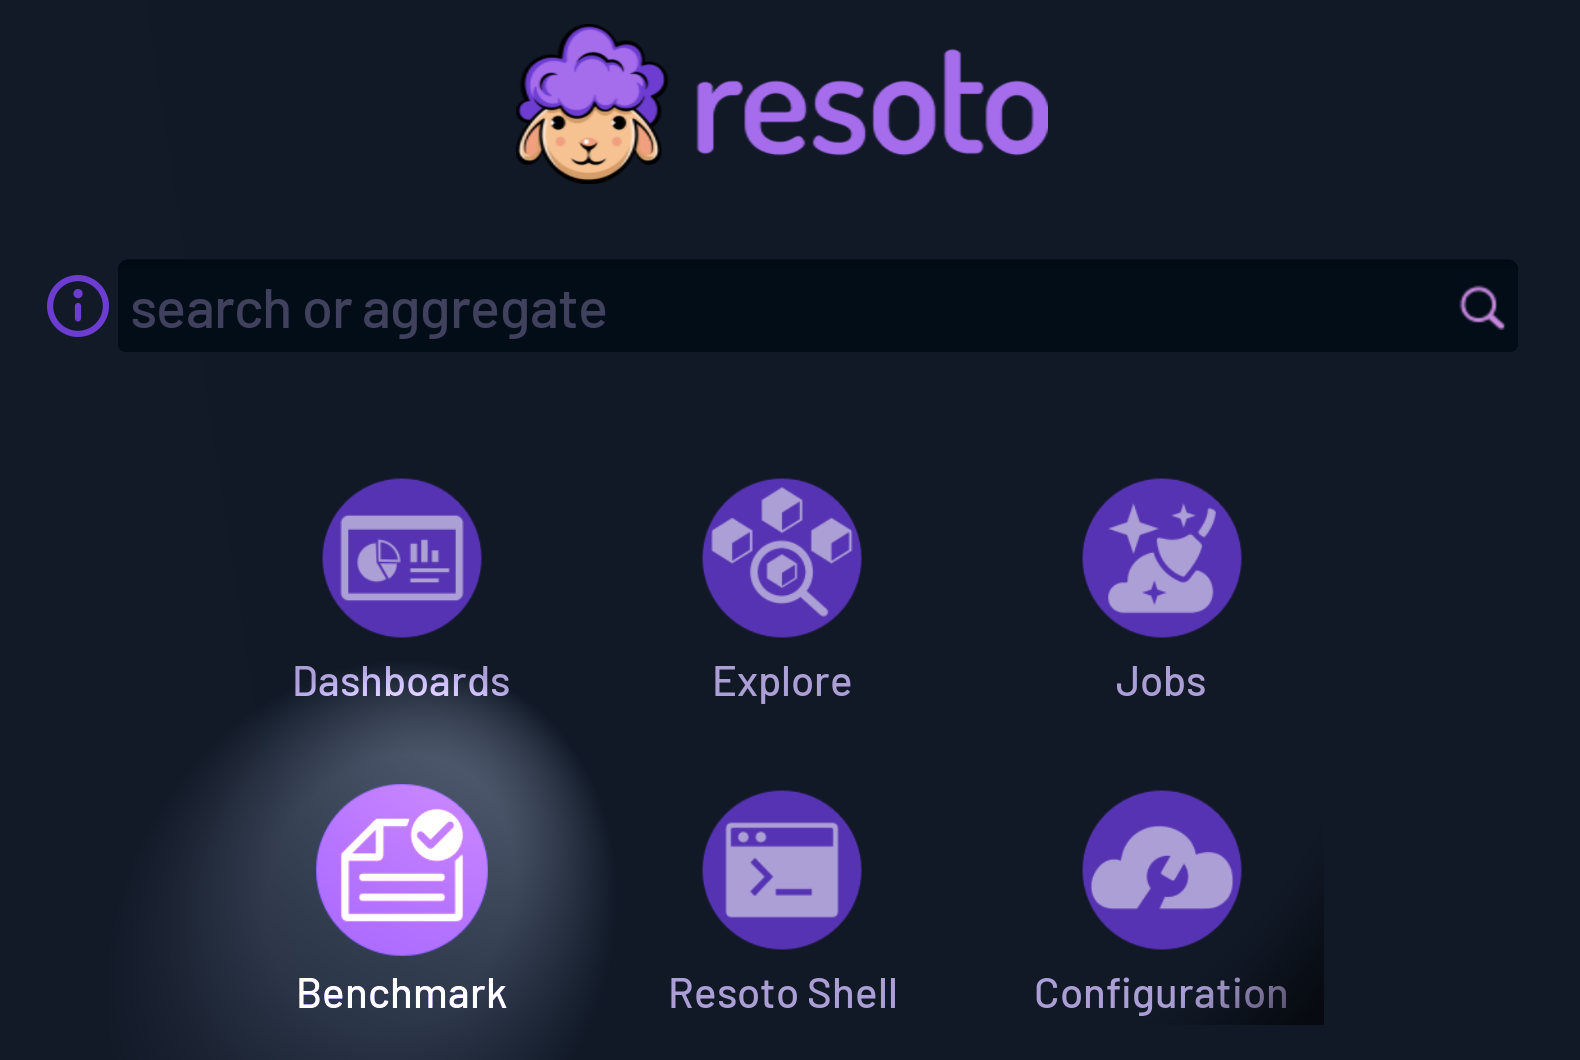 Resoto UI use Benchmark